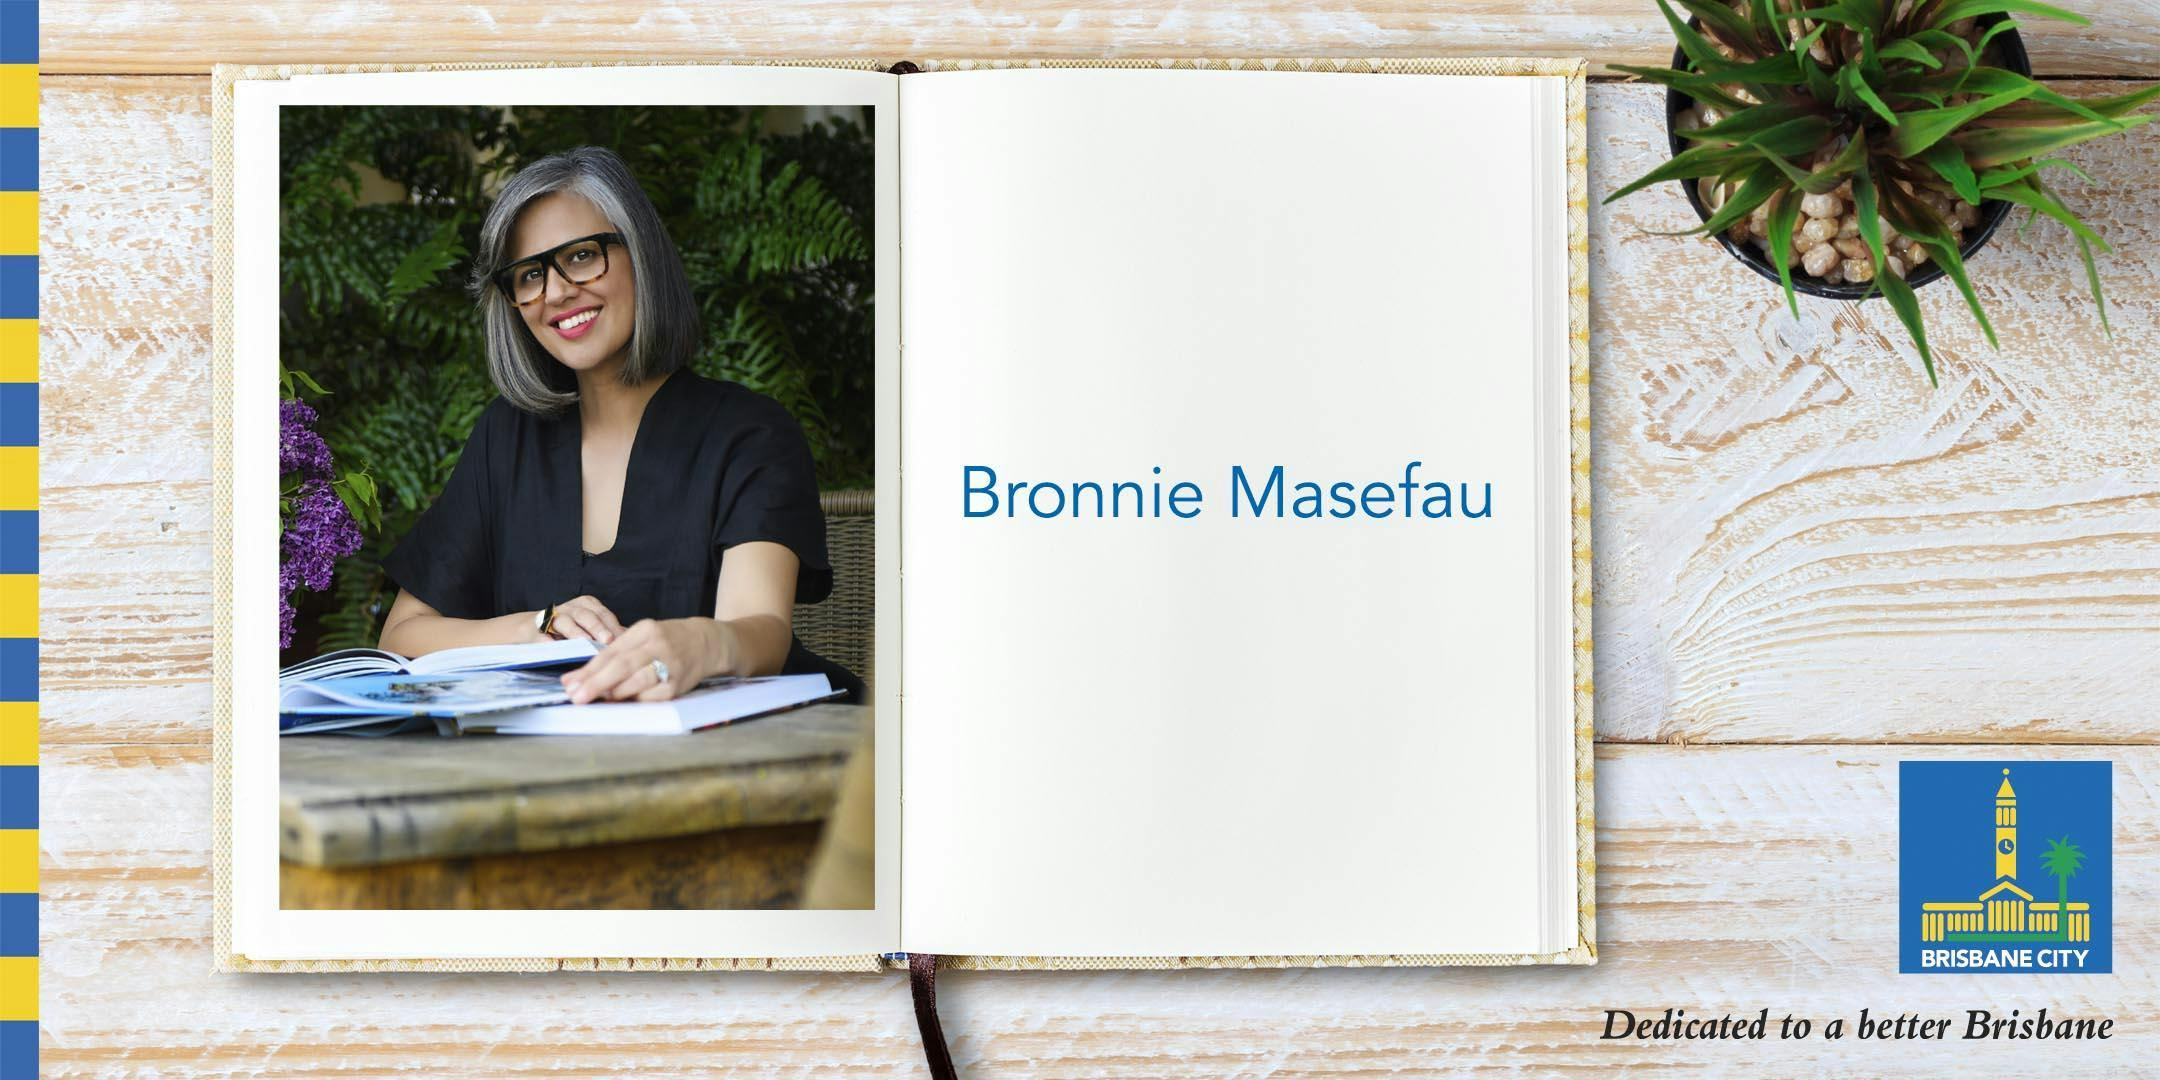 Meet Bronnie Masefau - Brisbane Square Library